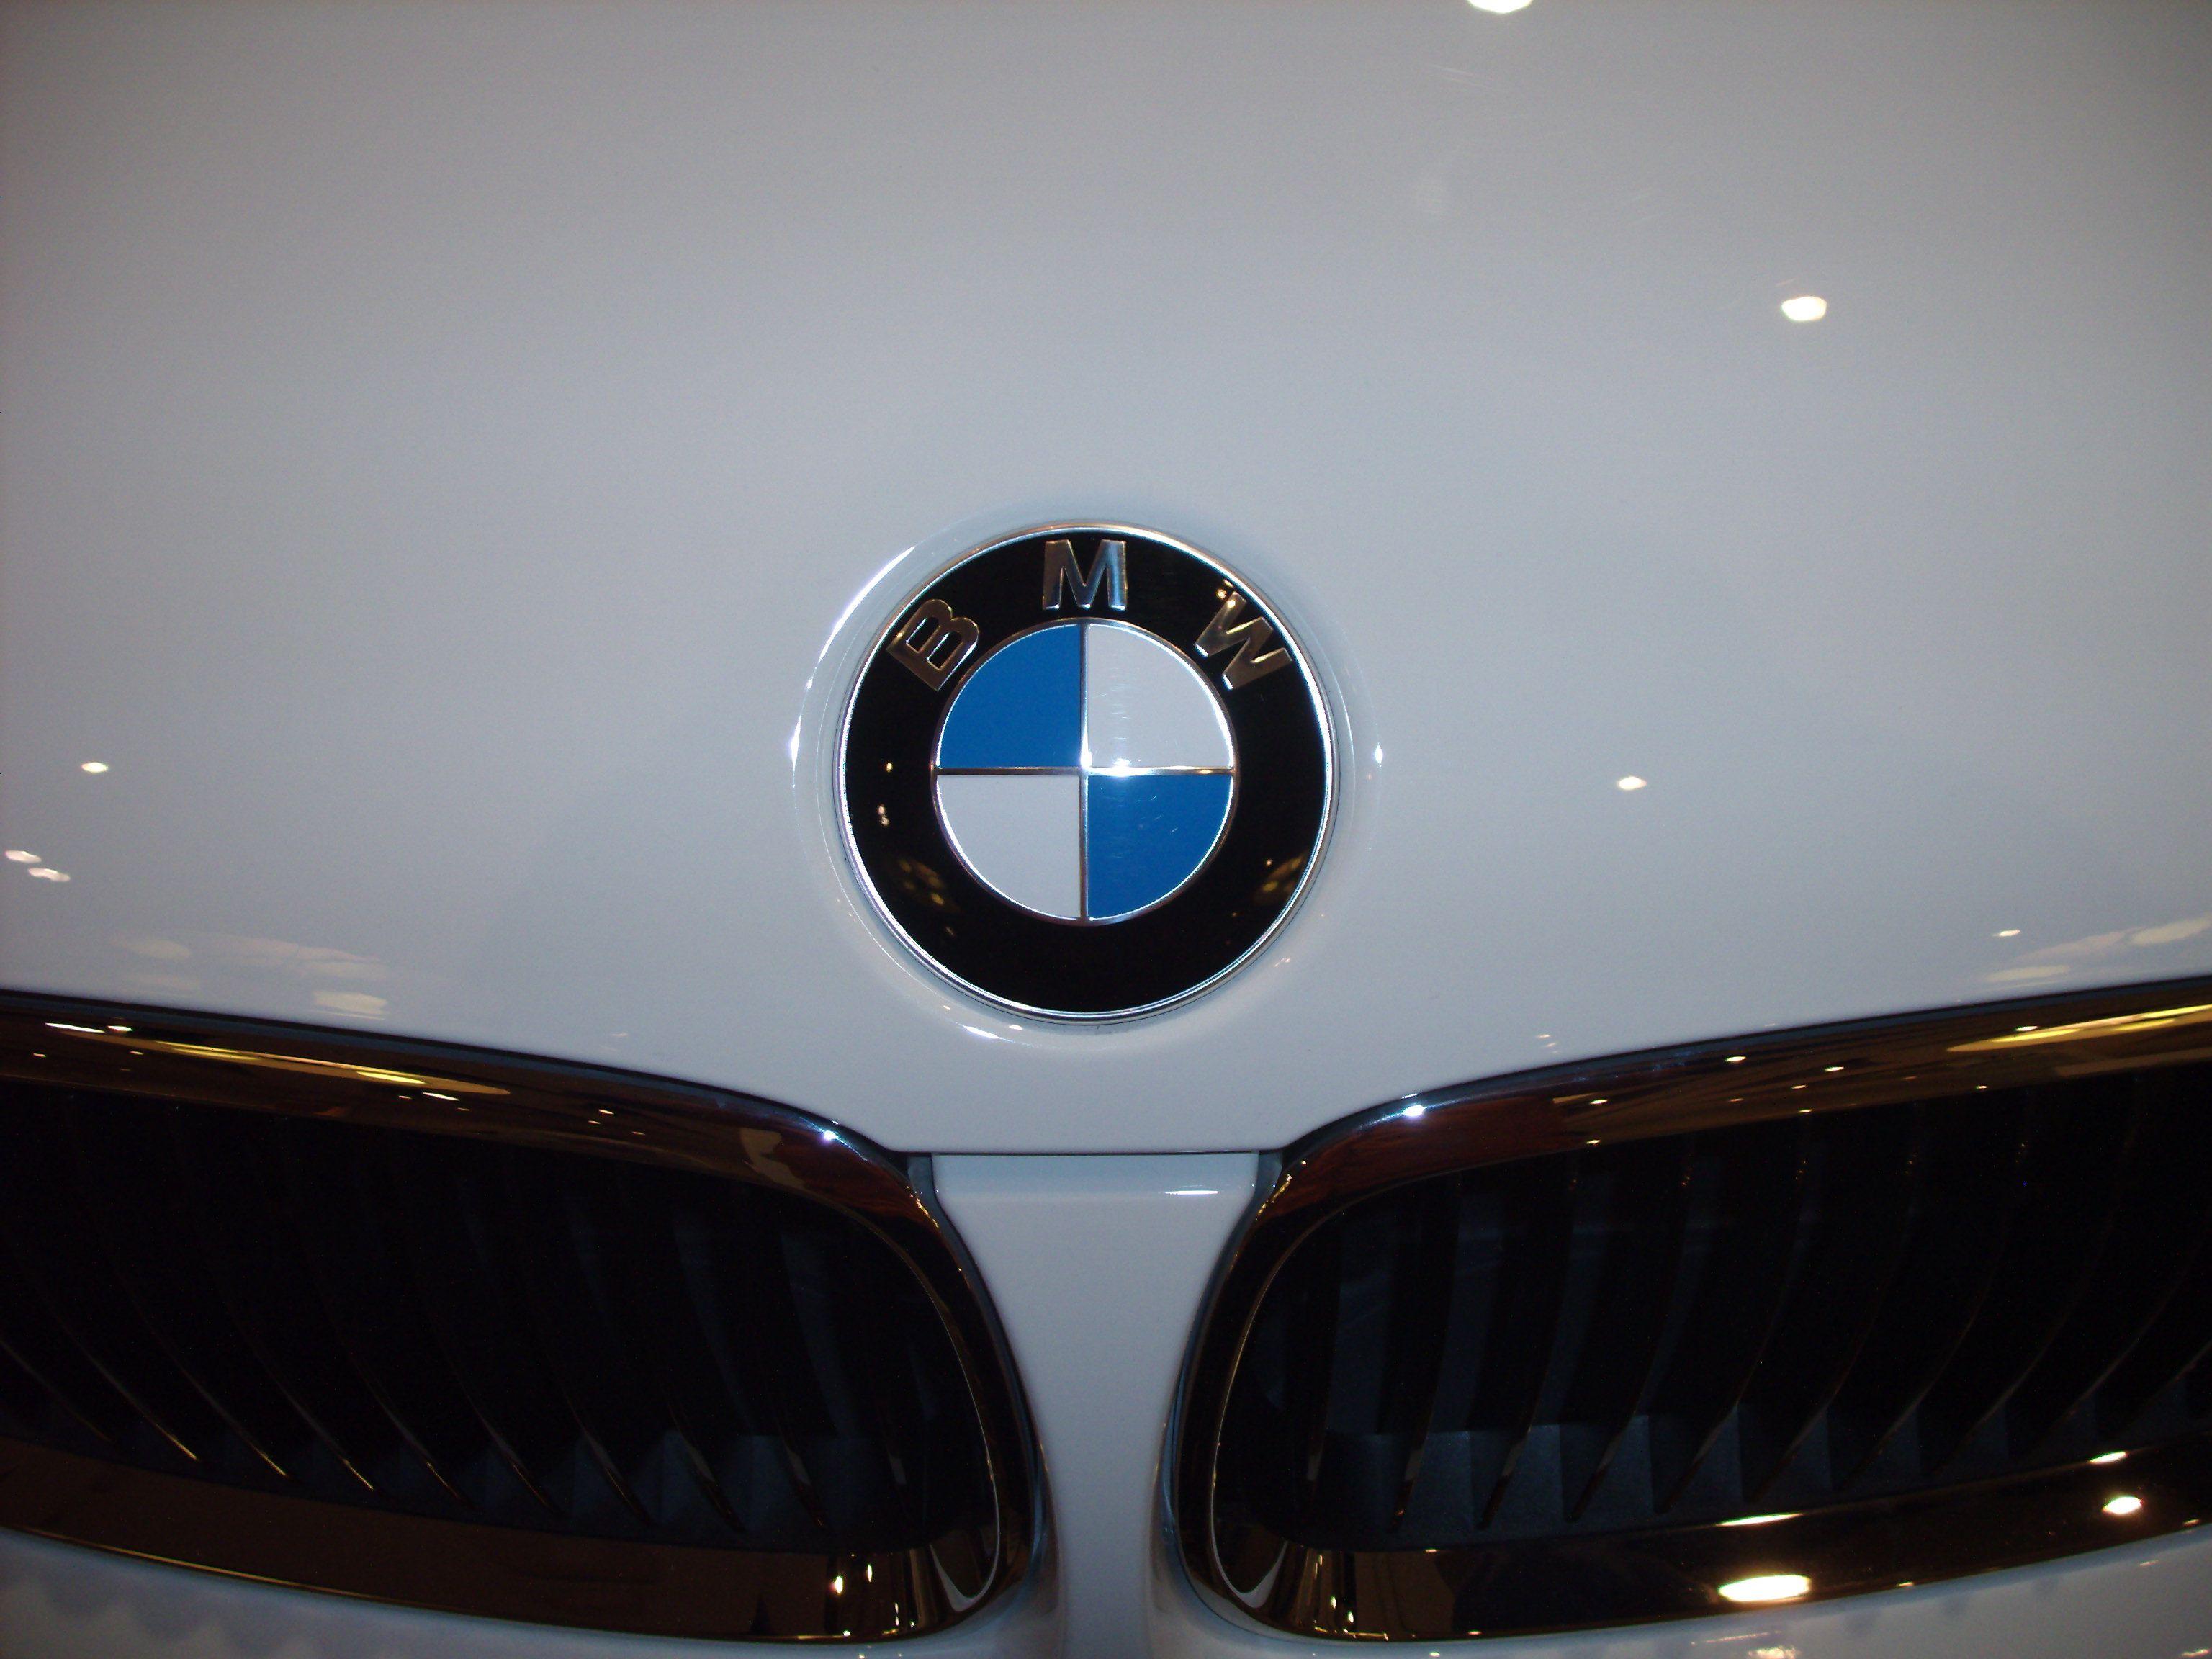 White BMW Logo - File:BMW Logo on White Car.jpg - Wikimedia Commons